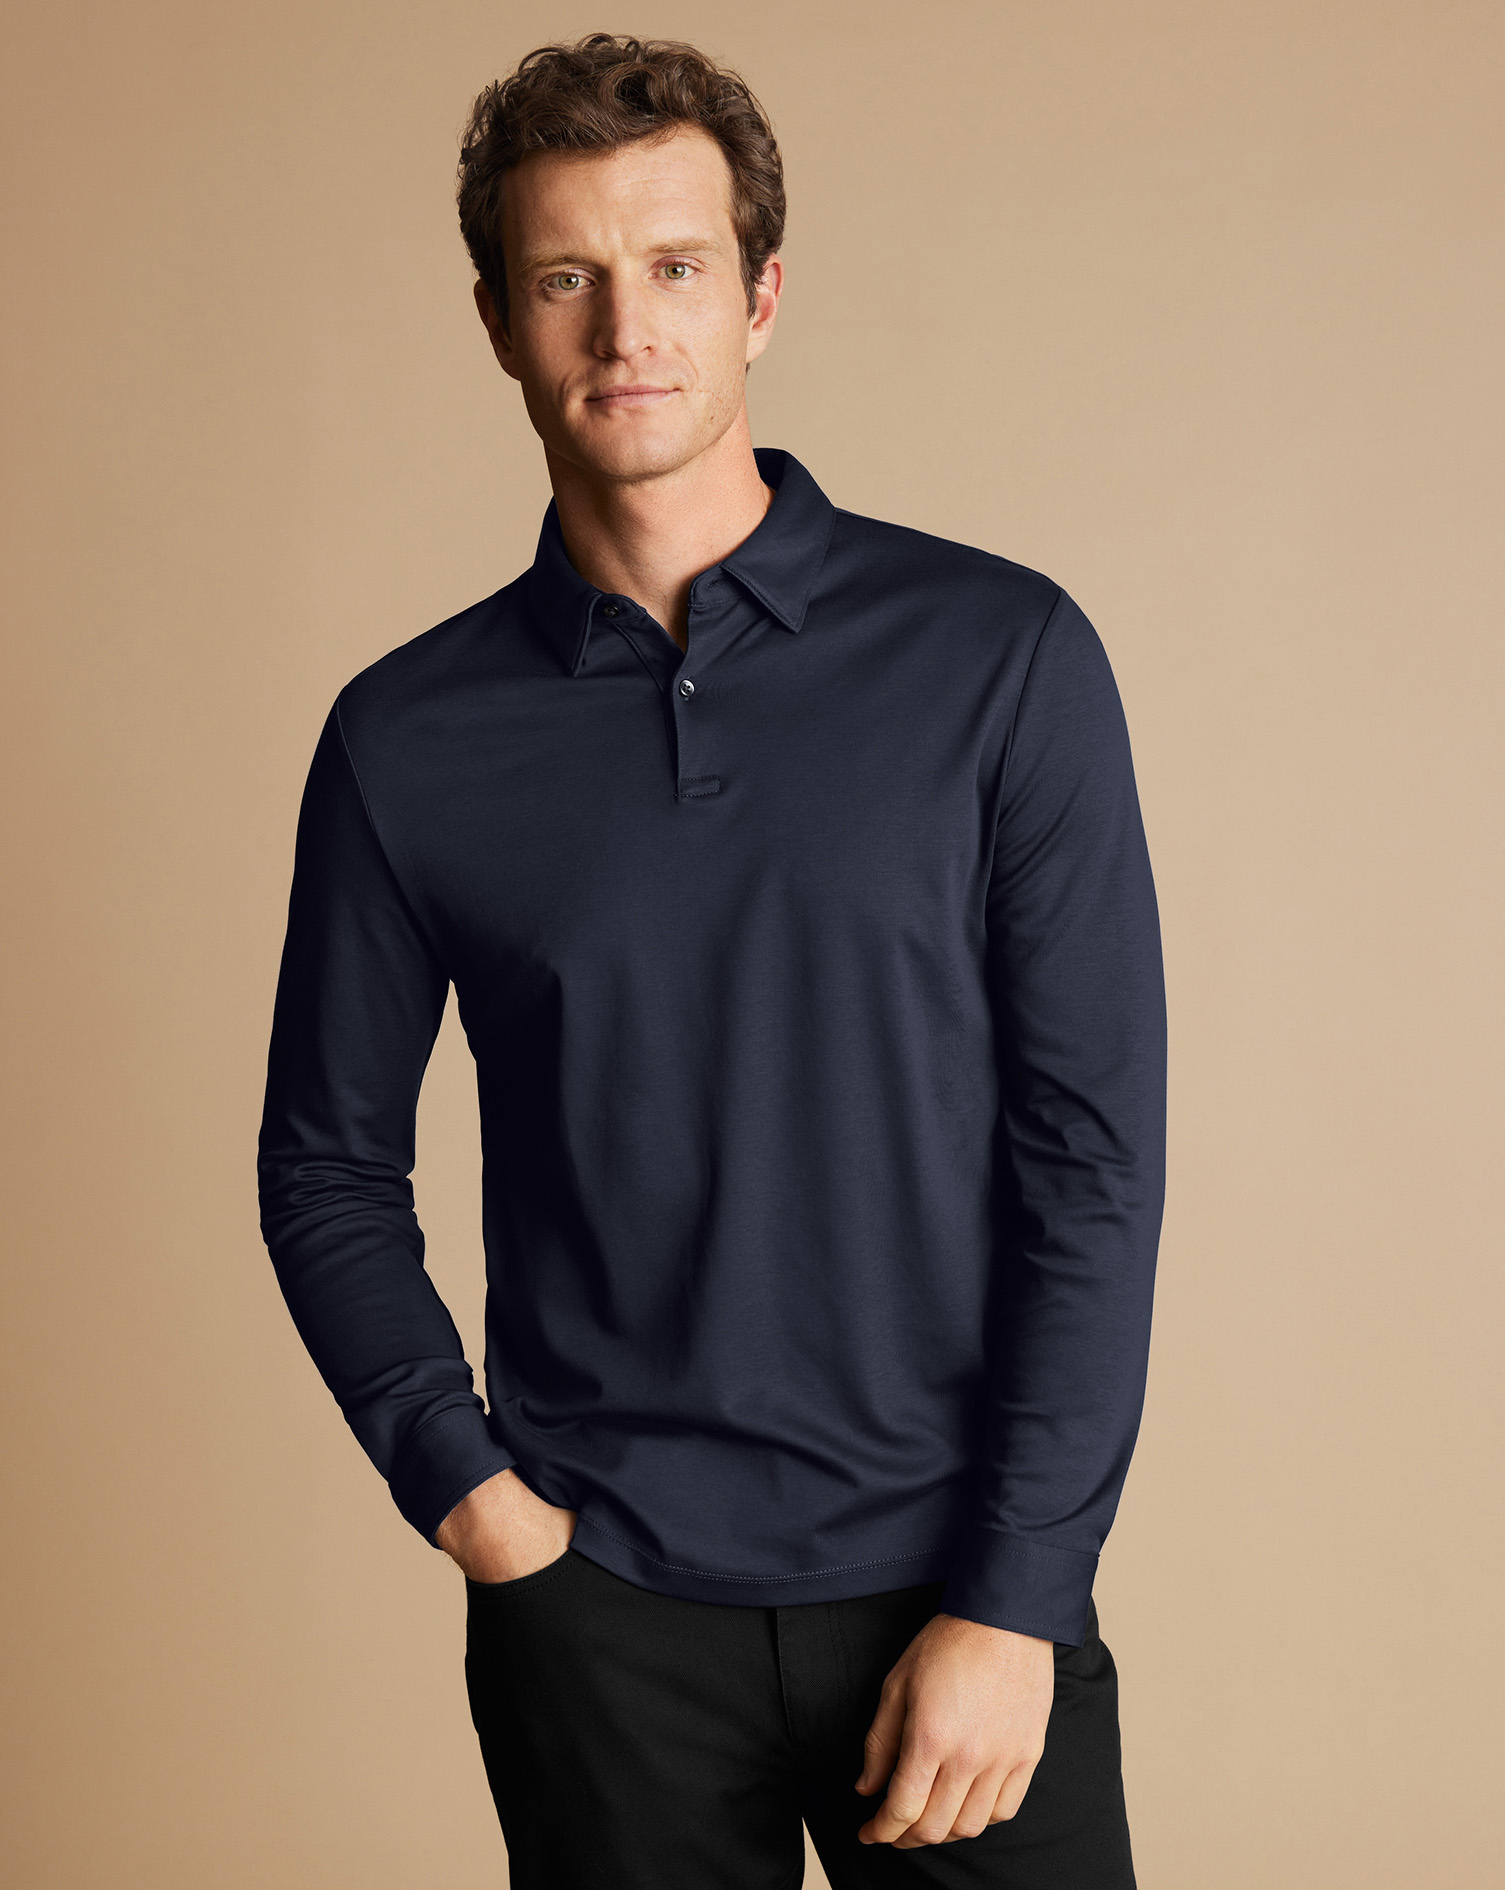 Mens Polo Long Sleeves T Shirt Tipping Collar Smart Casual Shirt Tops  Cotton UK 